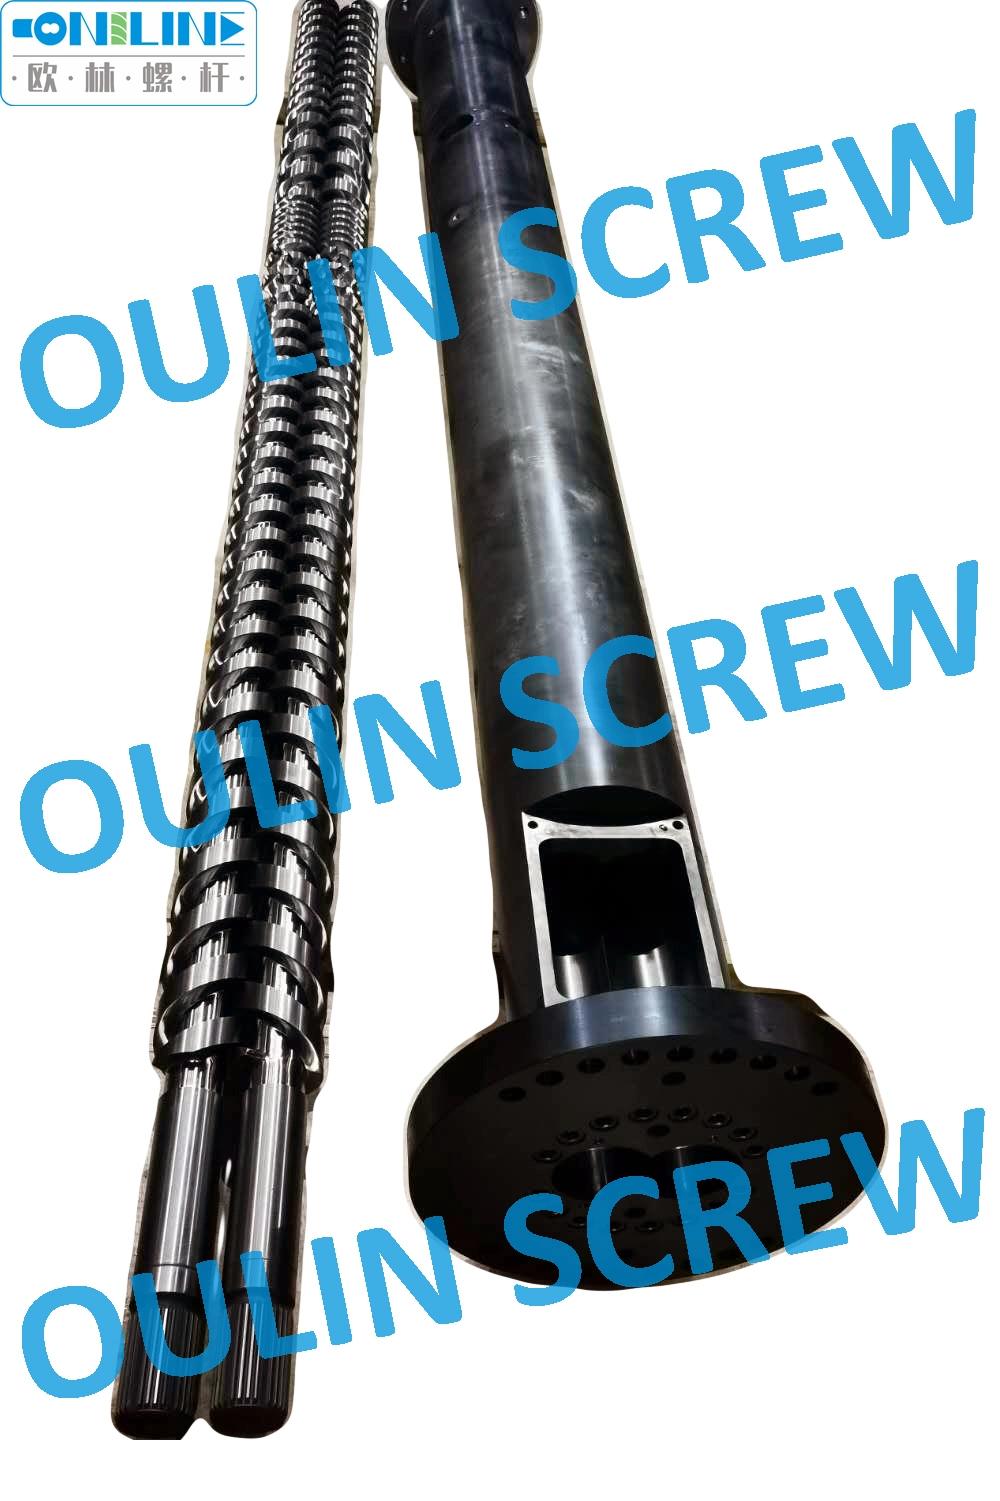 Factory Direct! Cincinnati 93mm Twin Screw and Barrel for PVC Profile